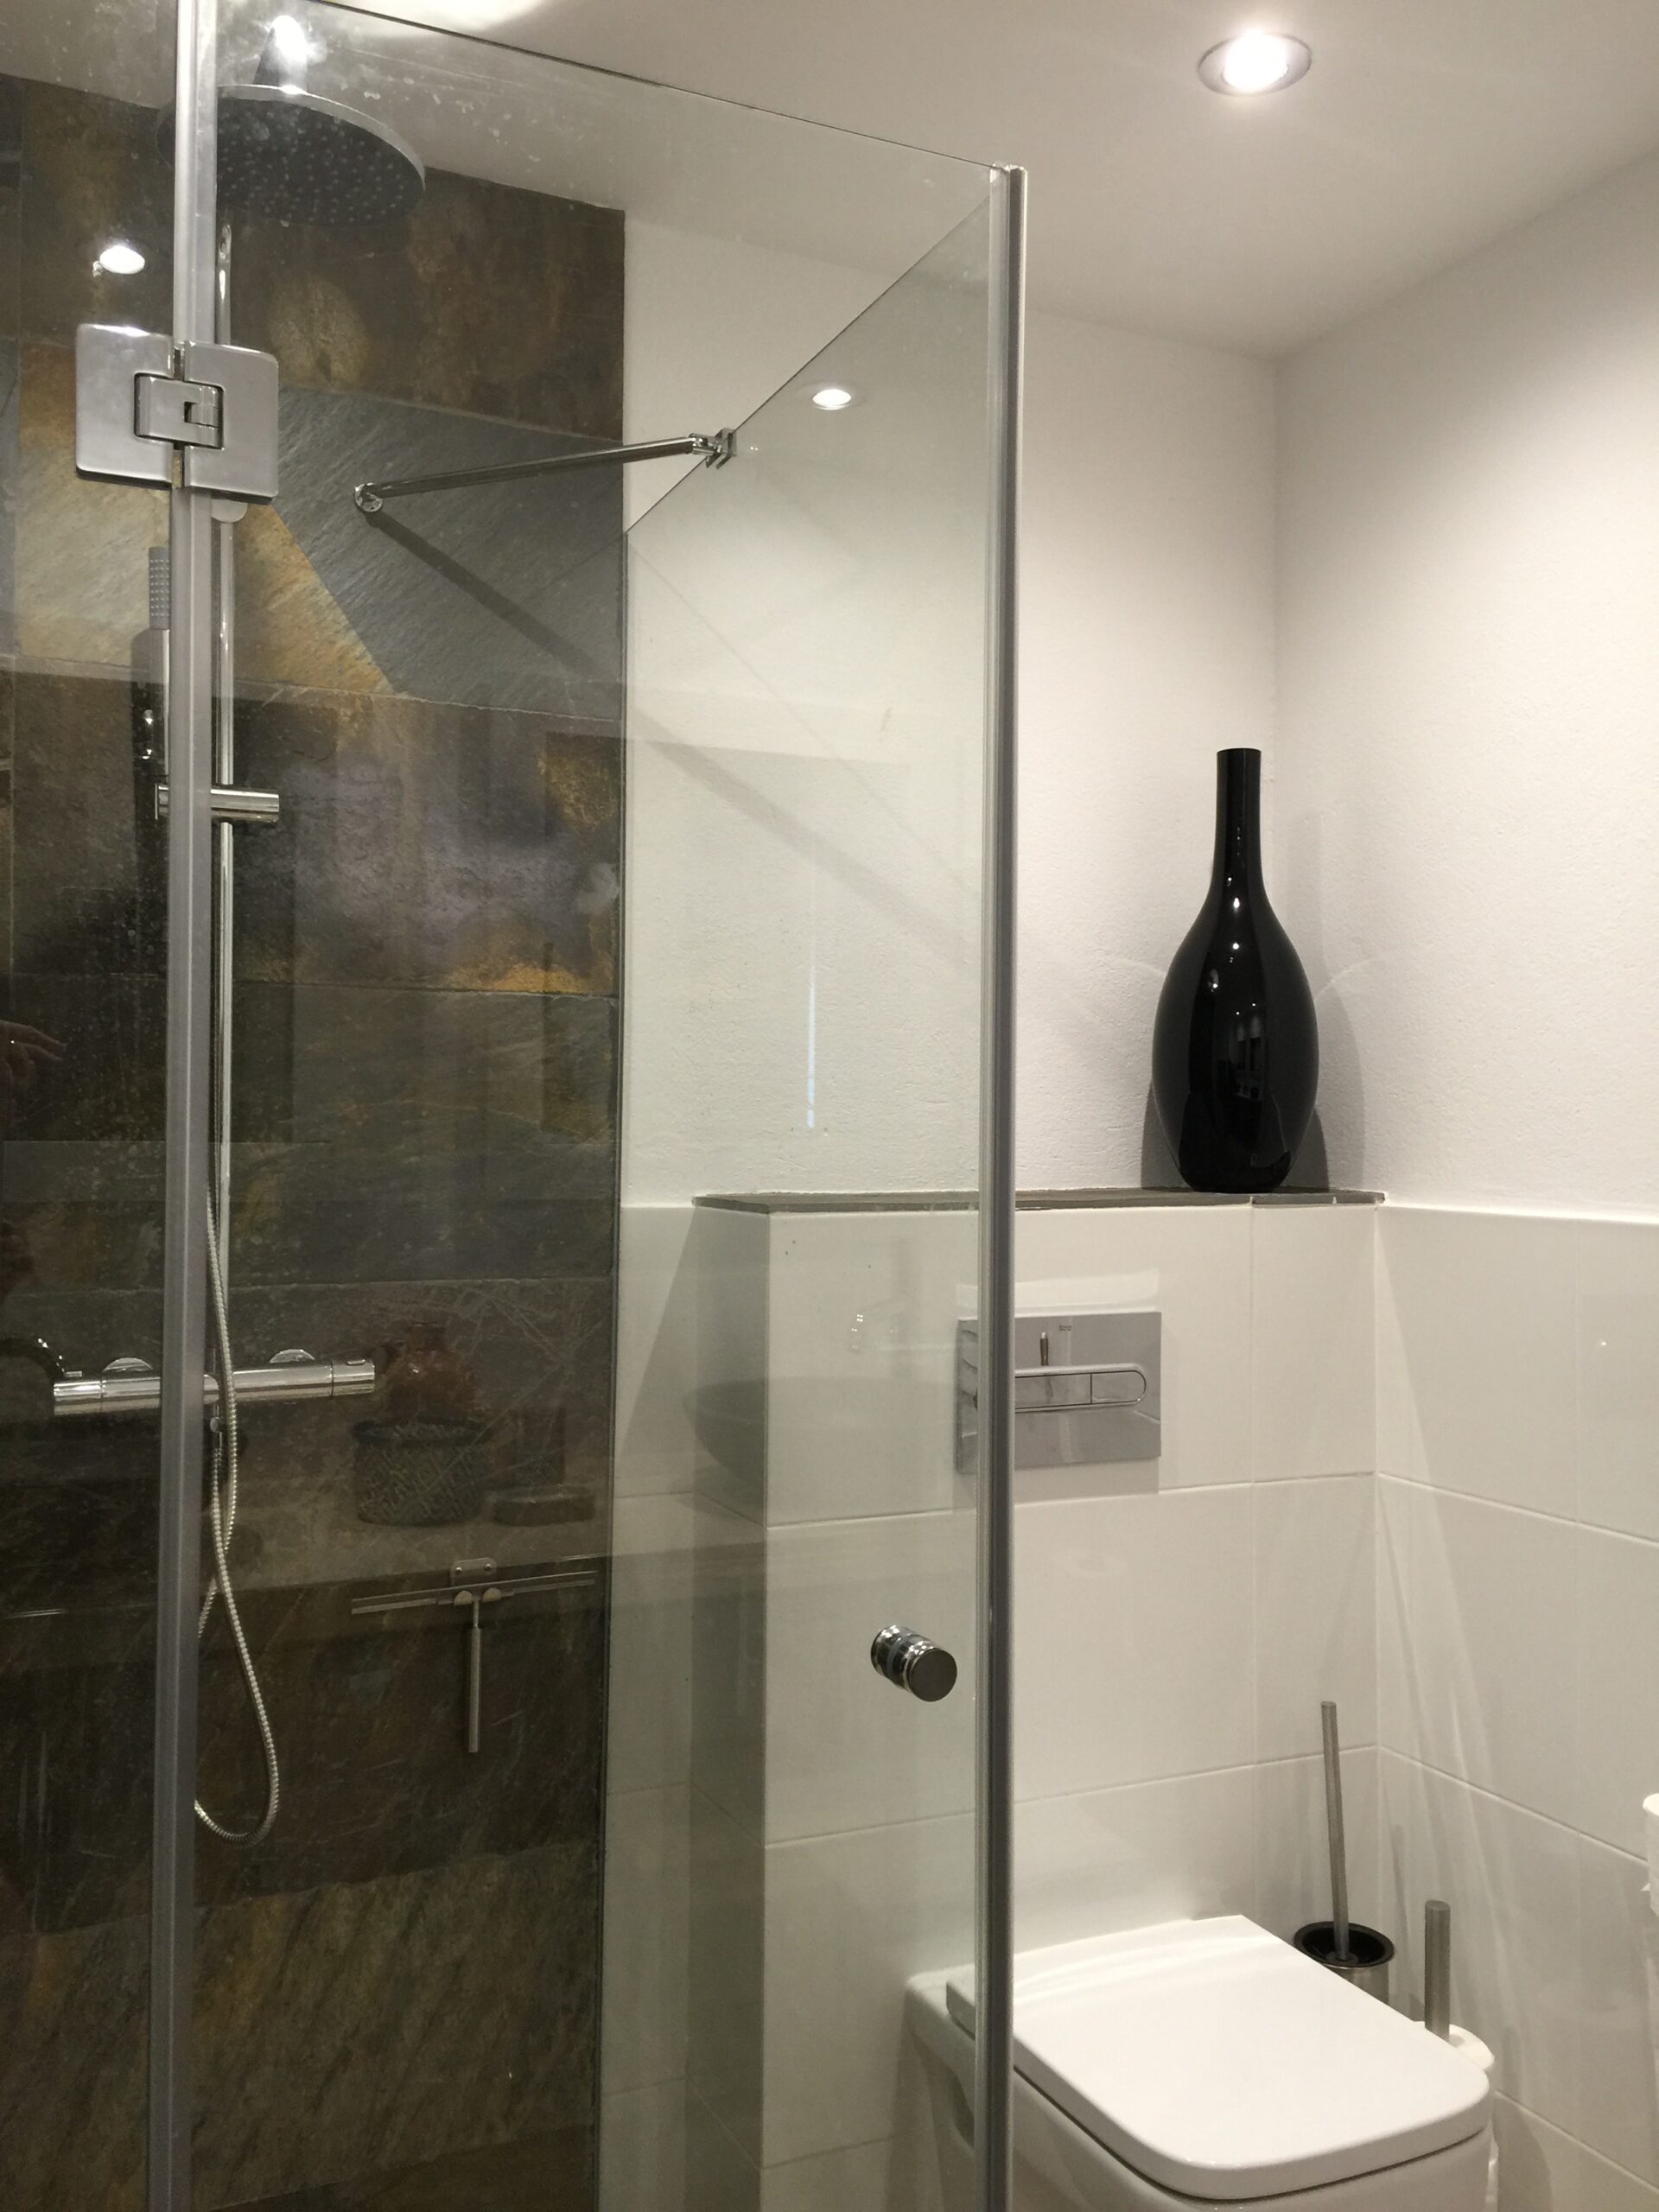 014 bathroom1 shower